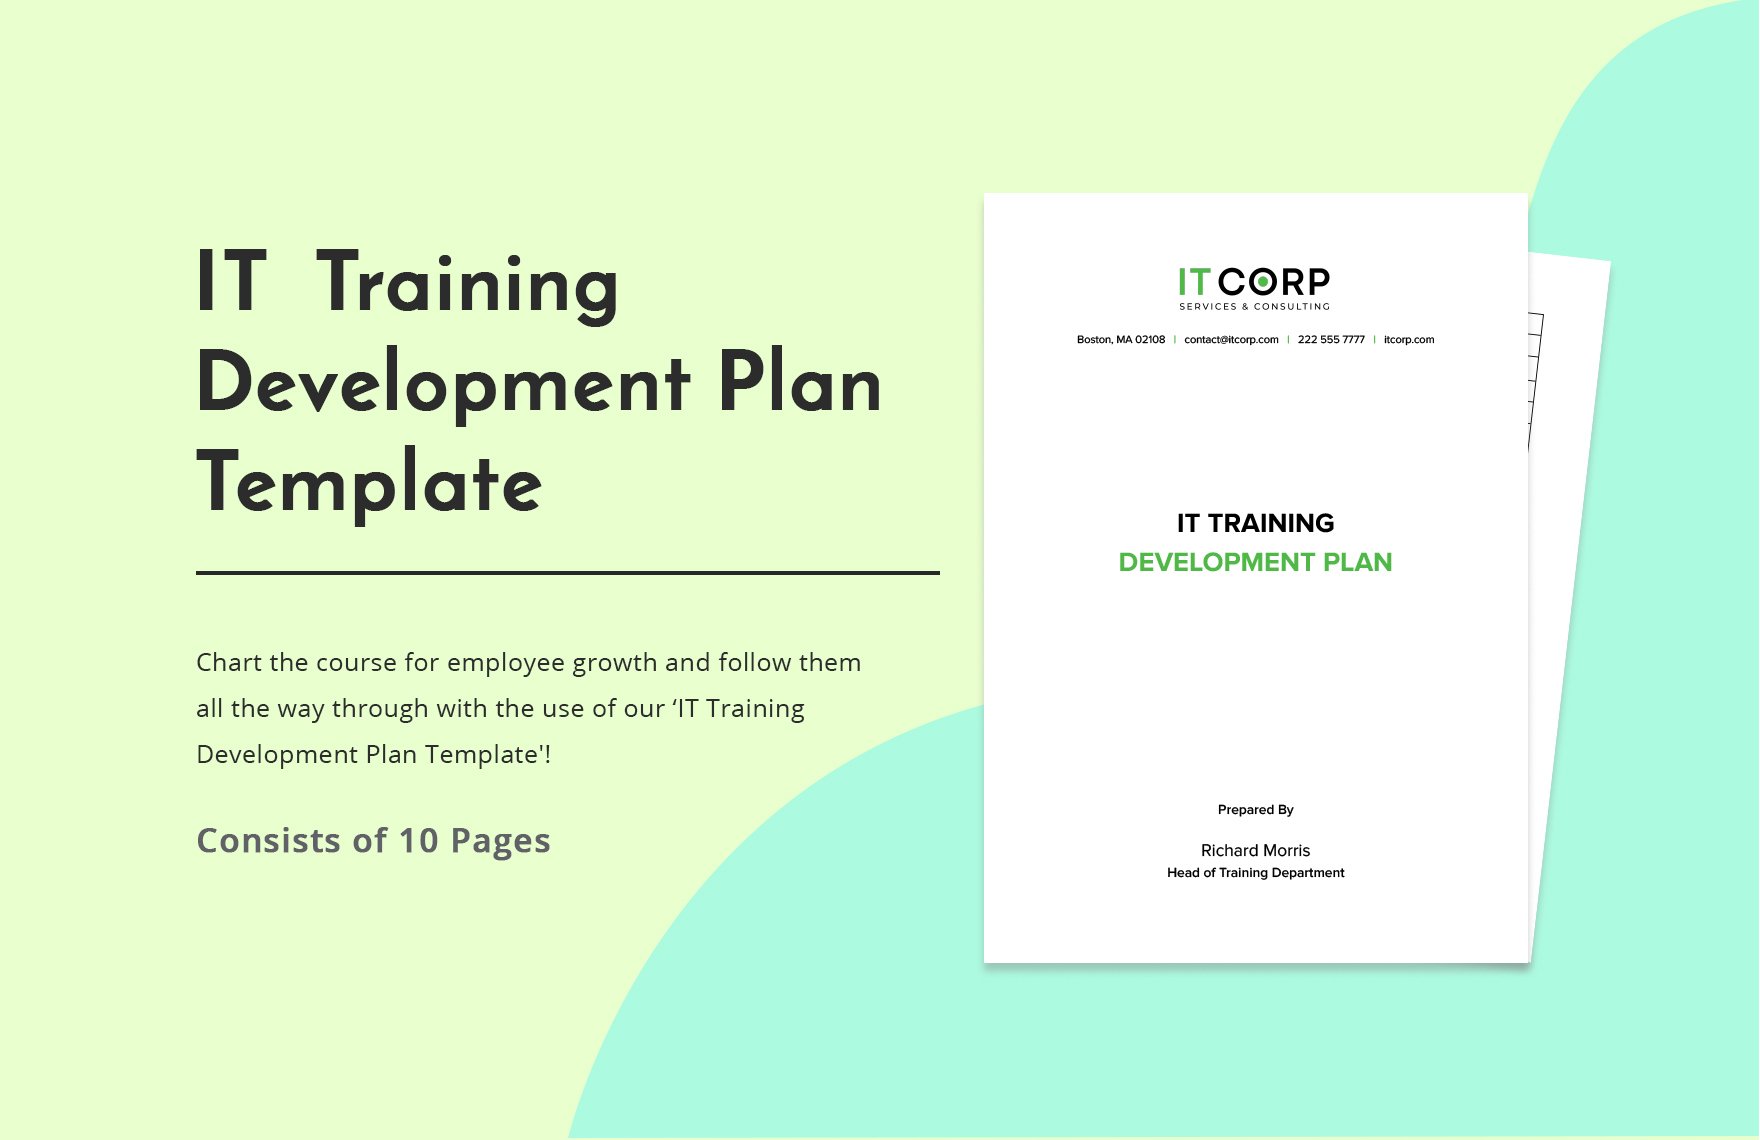 IT Training Development Plan Template